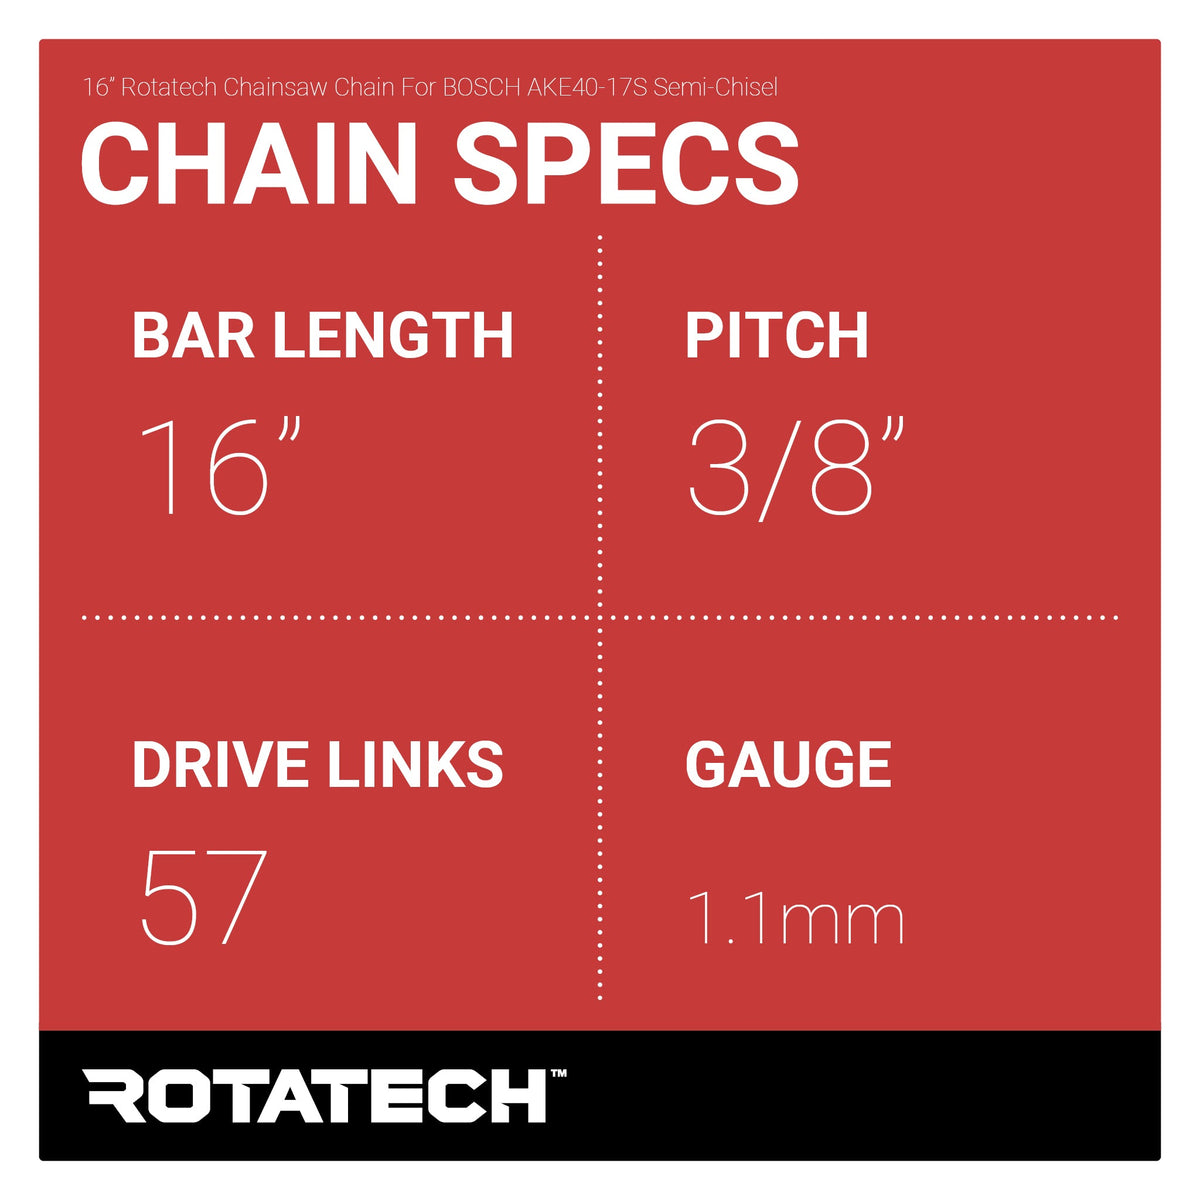 16" Rotatech Chainsaw Chain For BOSCH AKE40-17S Semi-Chisel Chain Specs